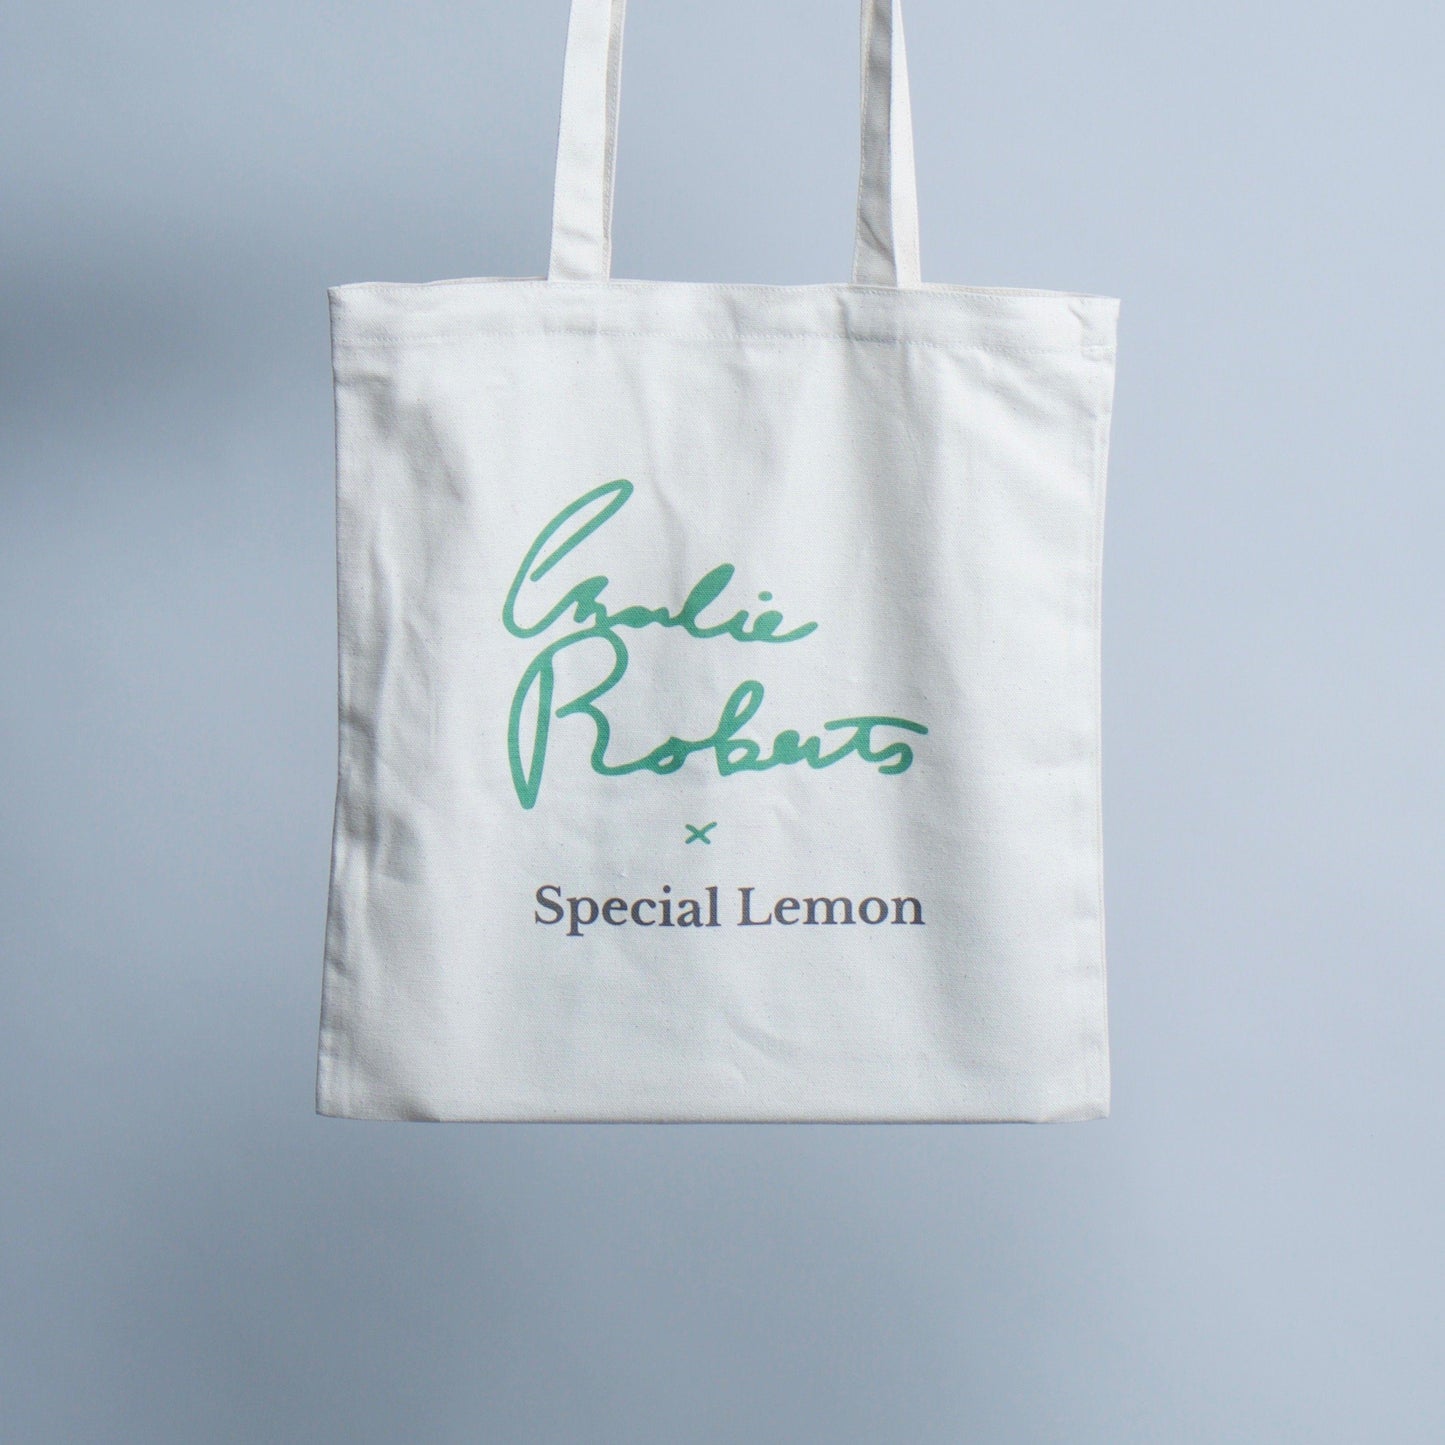 Special Lemon x Charlie Roberts tote bag - Salon Dogs Tote bag Special Lemon 